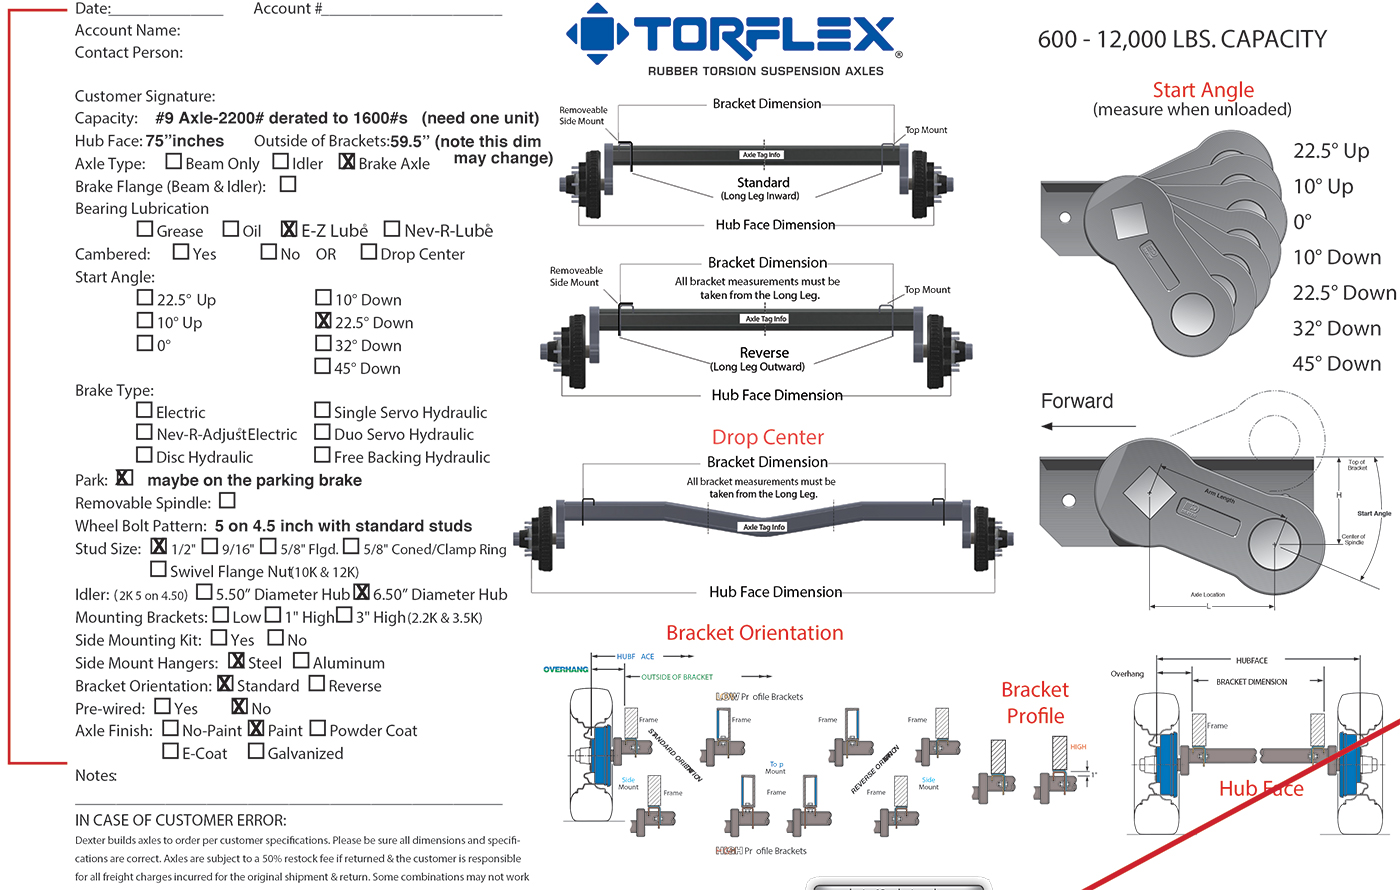 Torflex order .jpg